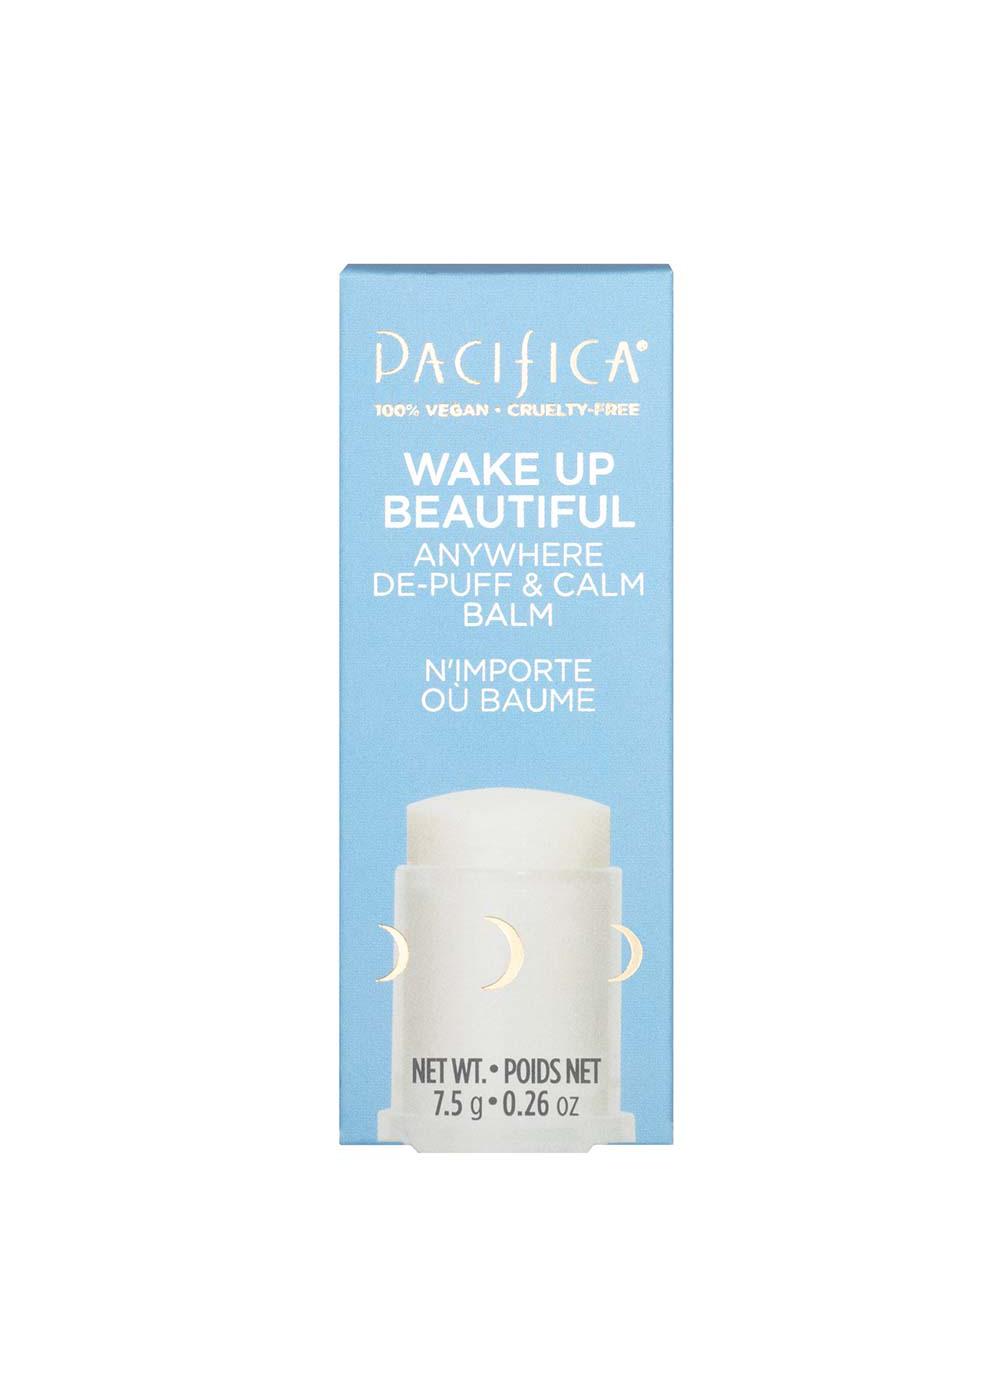 Pacifica Wake Up Beautiful Anywhere De-Puff & Calm Balm; image 1 of 5